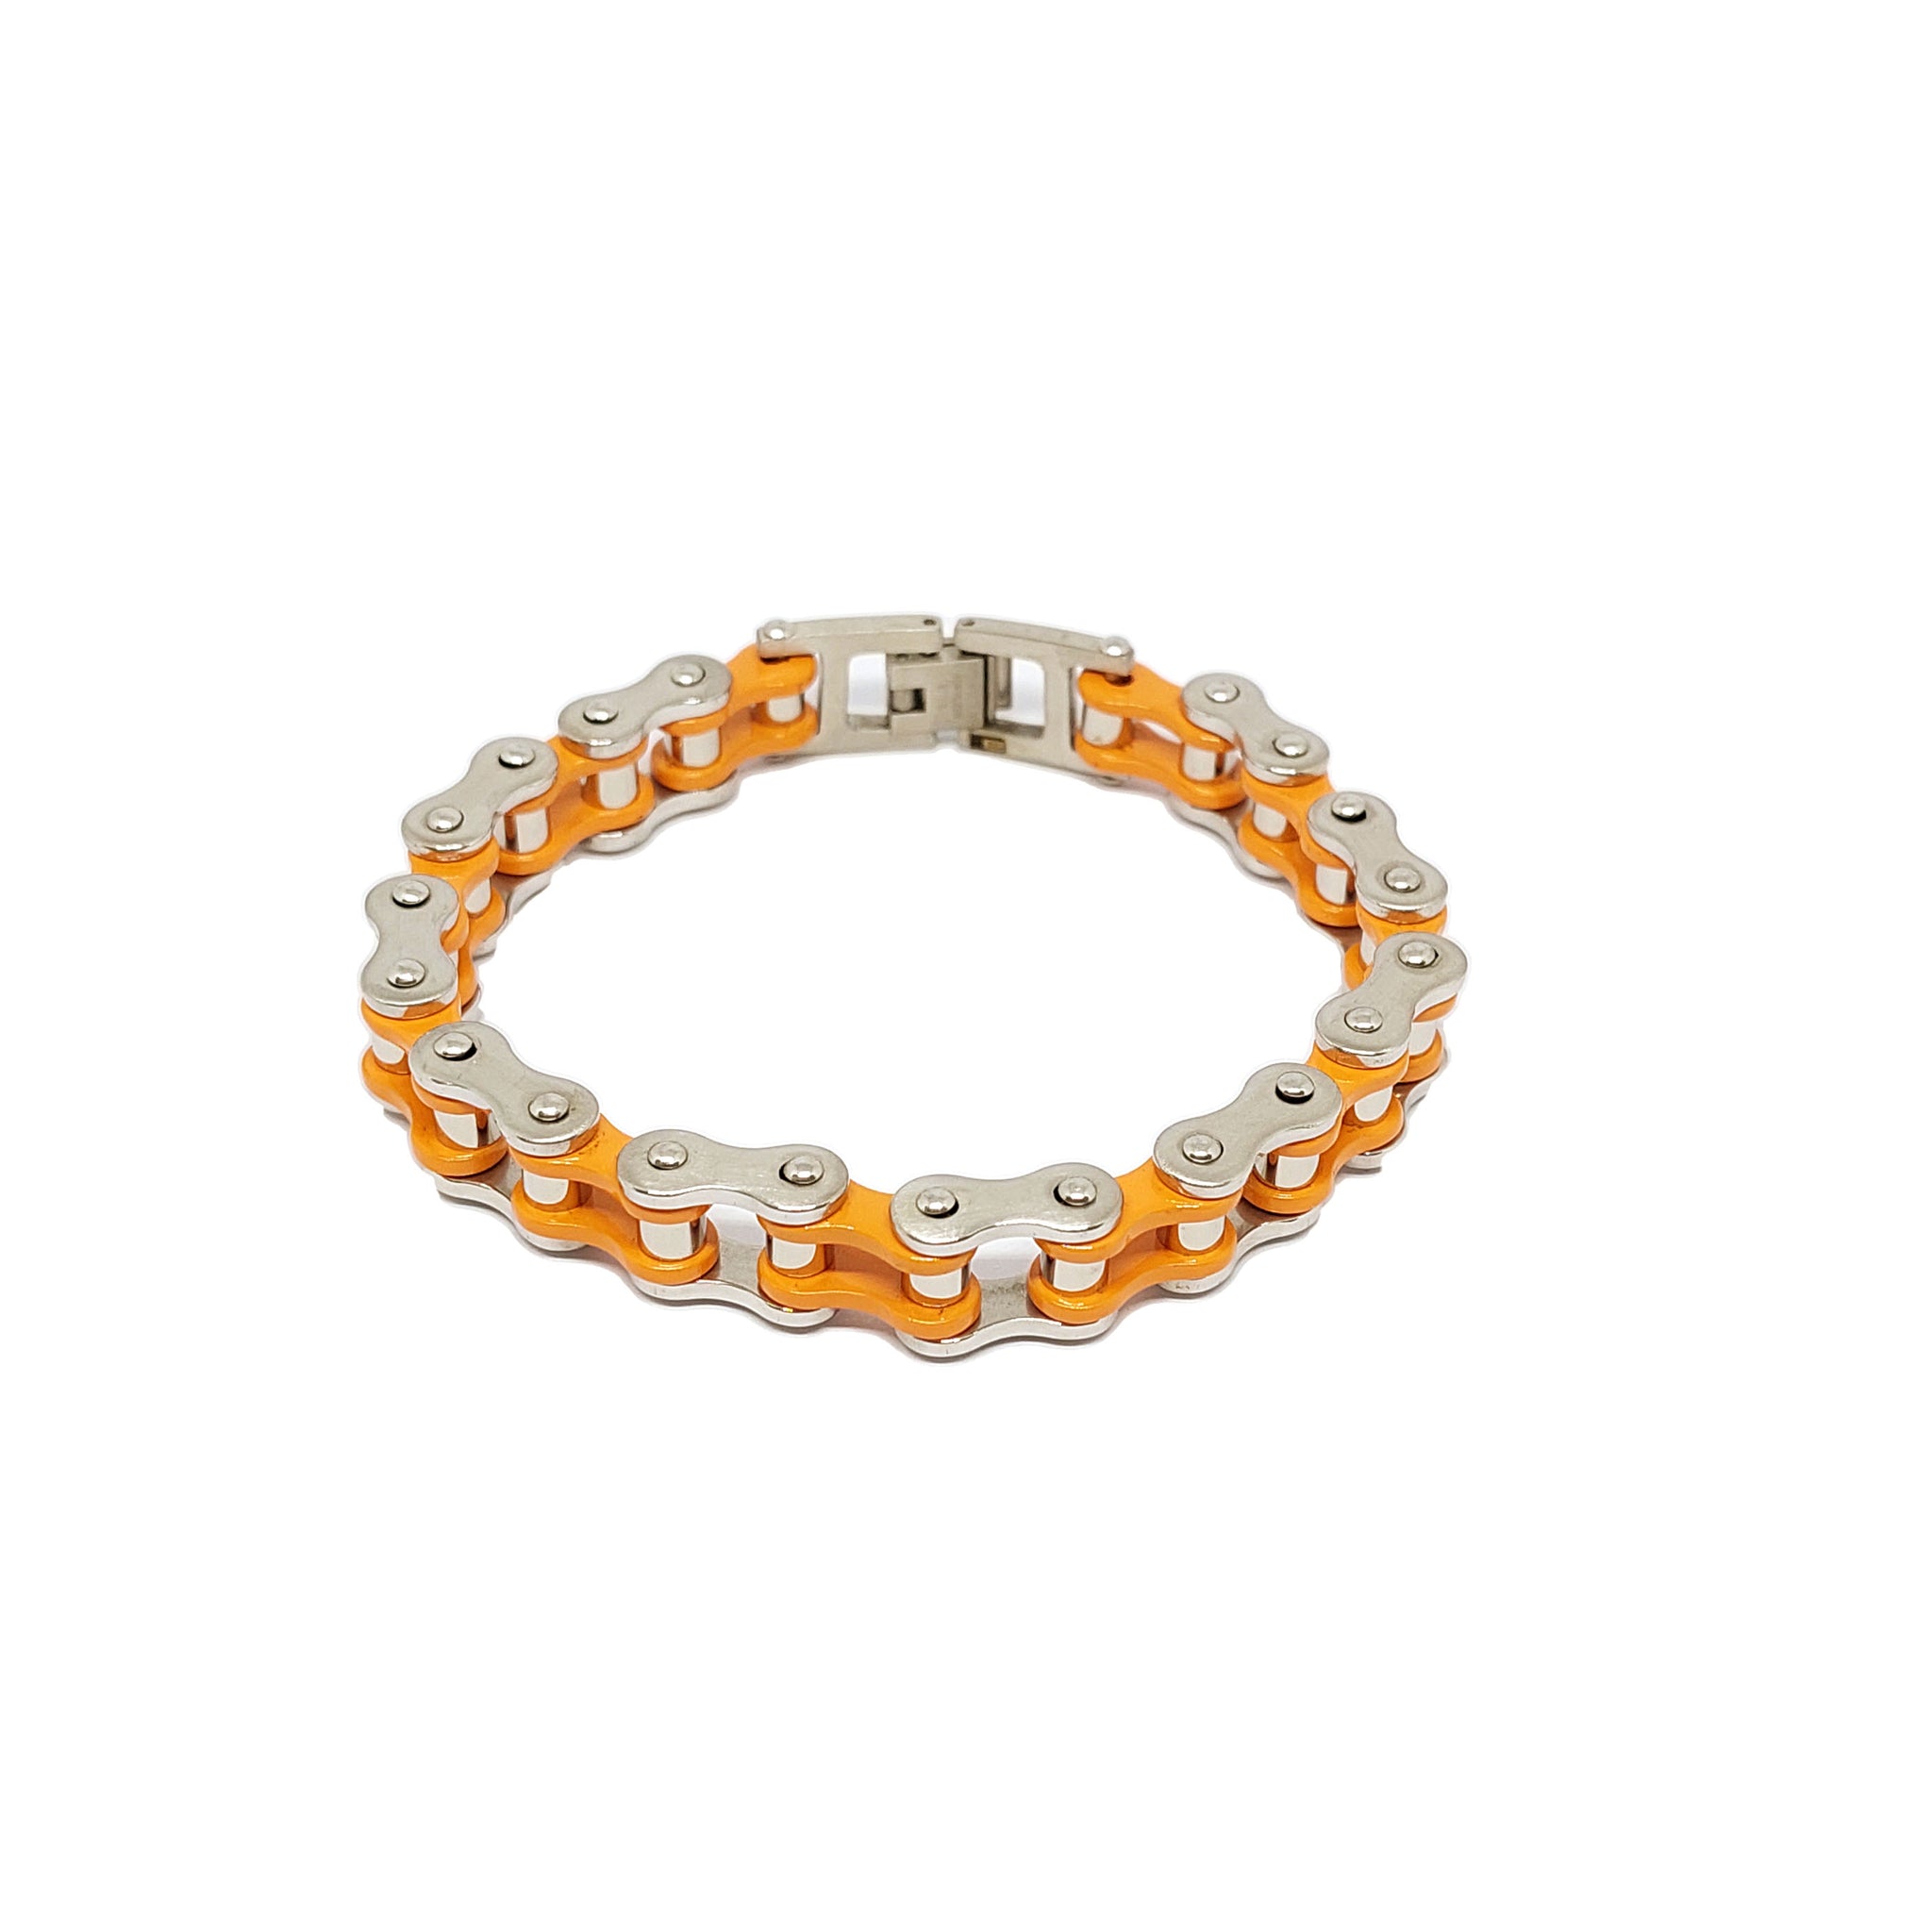 ESBL 7974: Bicycle Chain Bracelet w/ Orange Accents